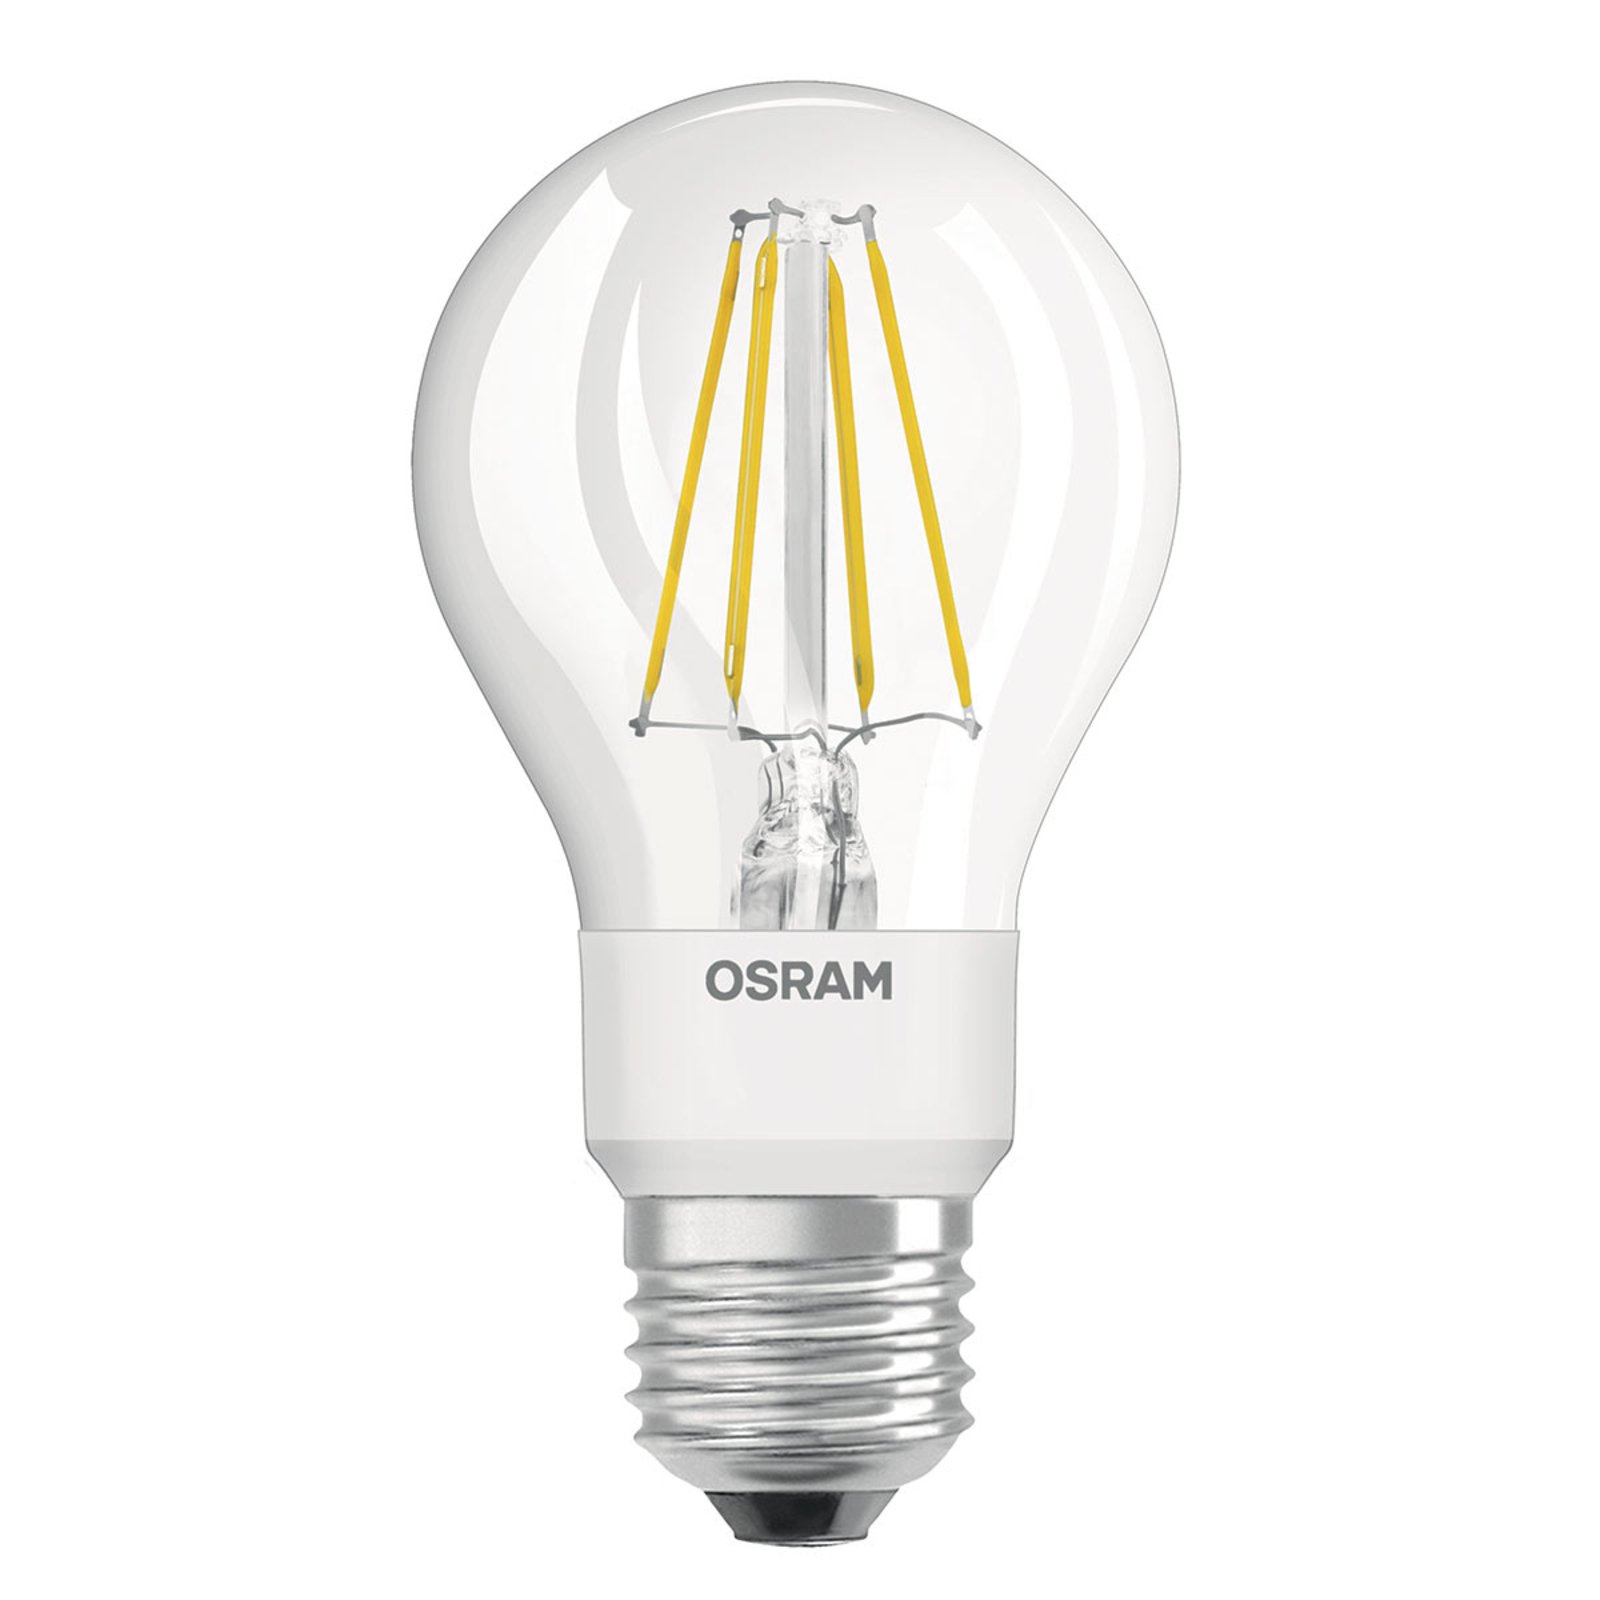 OSRAM Lampada LED 4W Star GLOWdim Filamento transparente